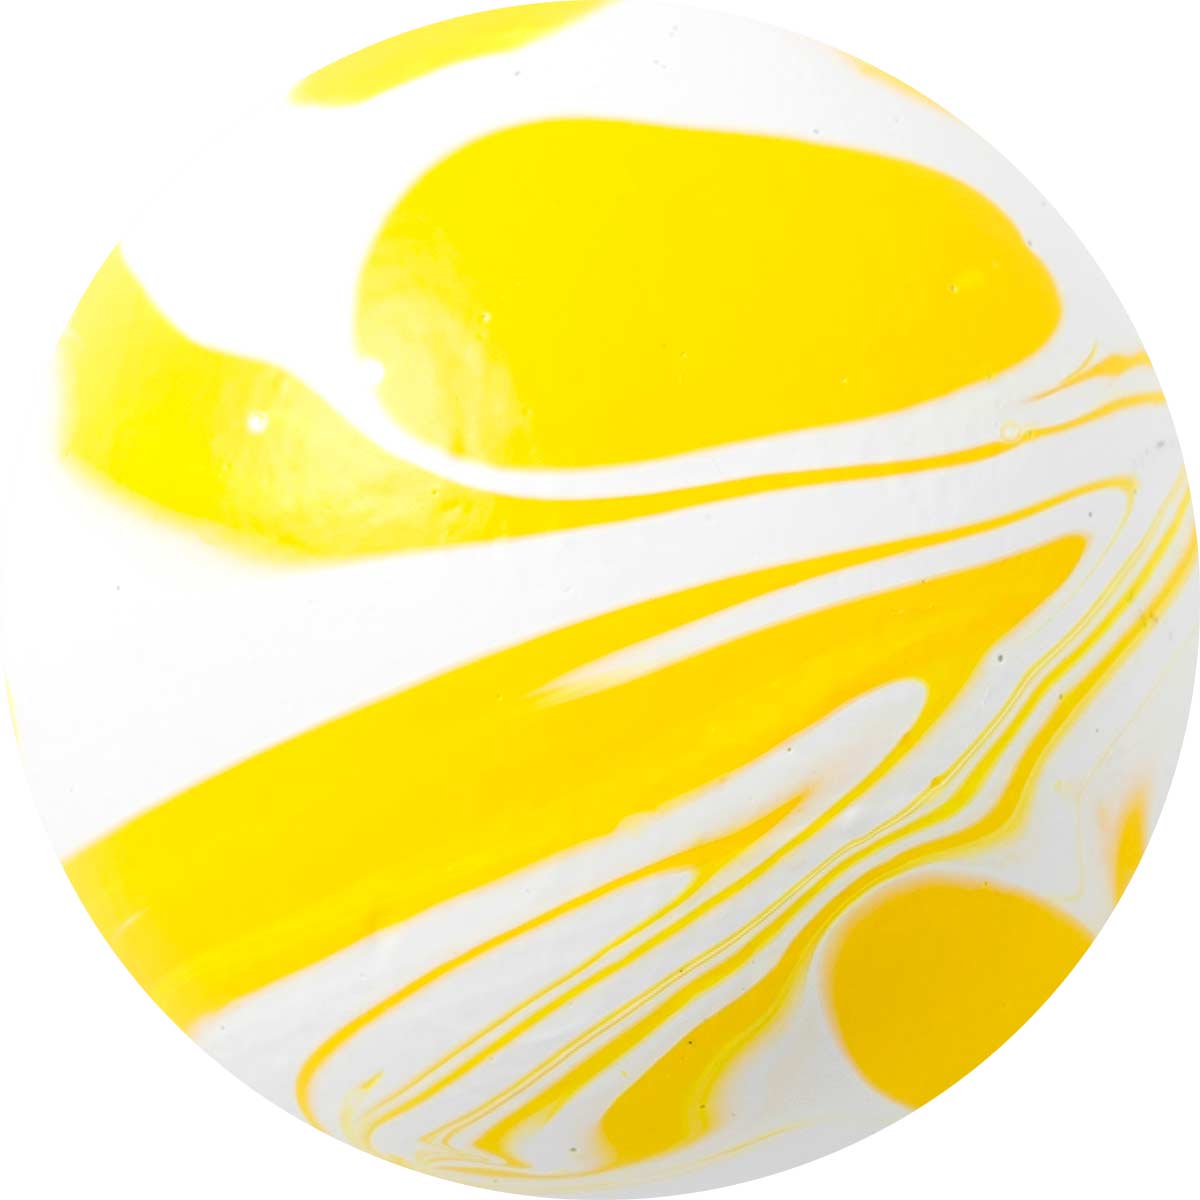 FolkArt ® Marbling Paint - Yellow, 2 oz. - 16924